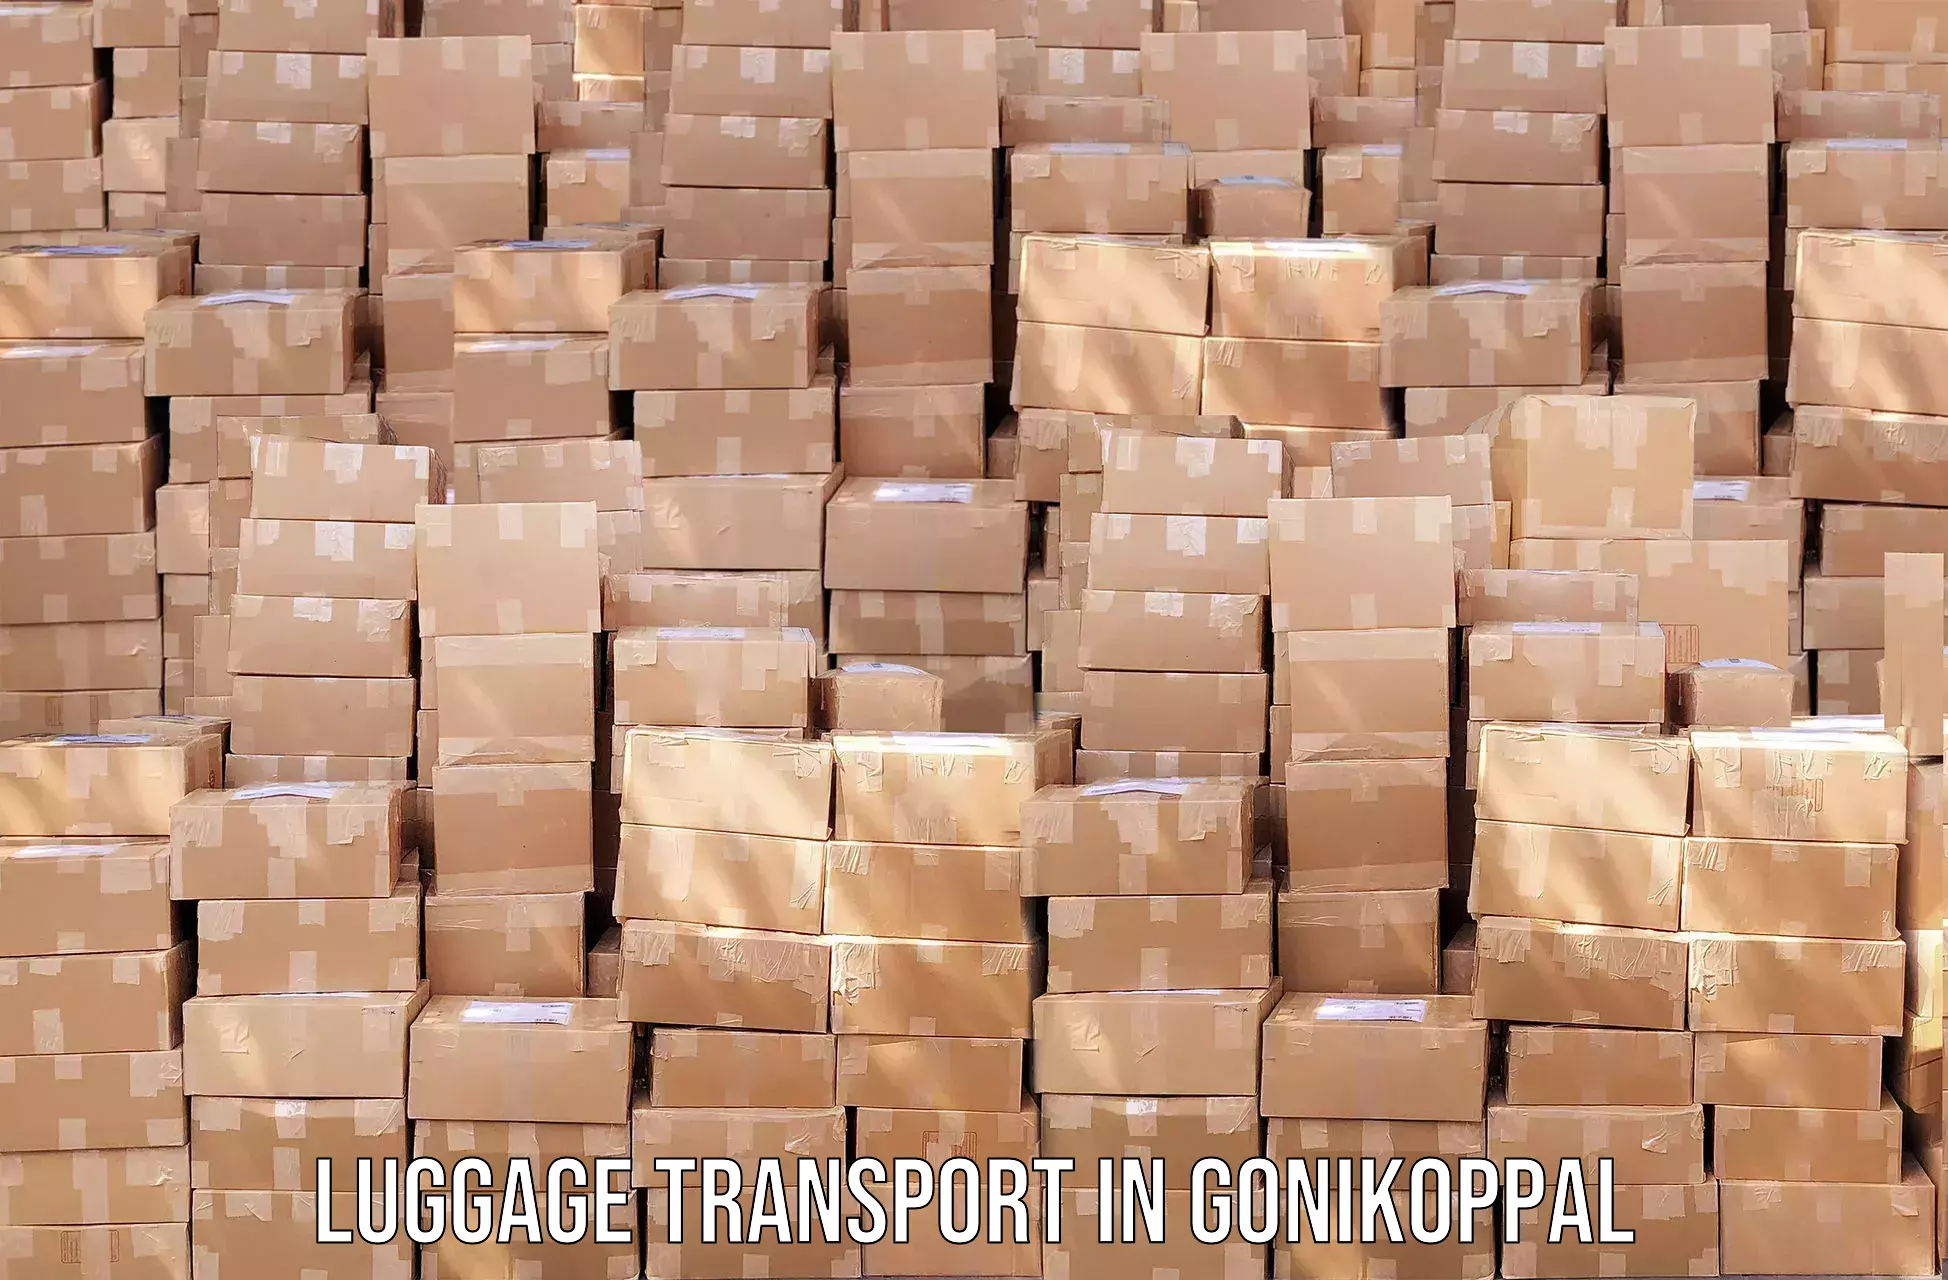 Baggage transport innovation in Gonikoppal